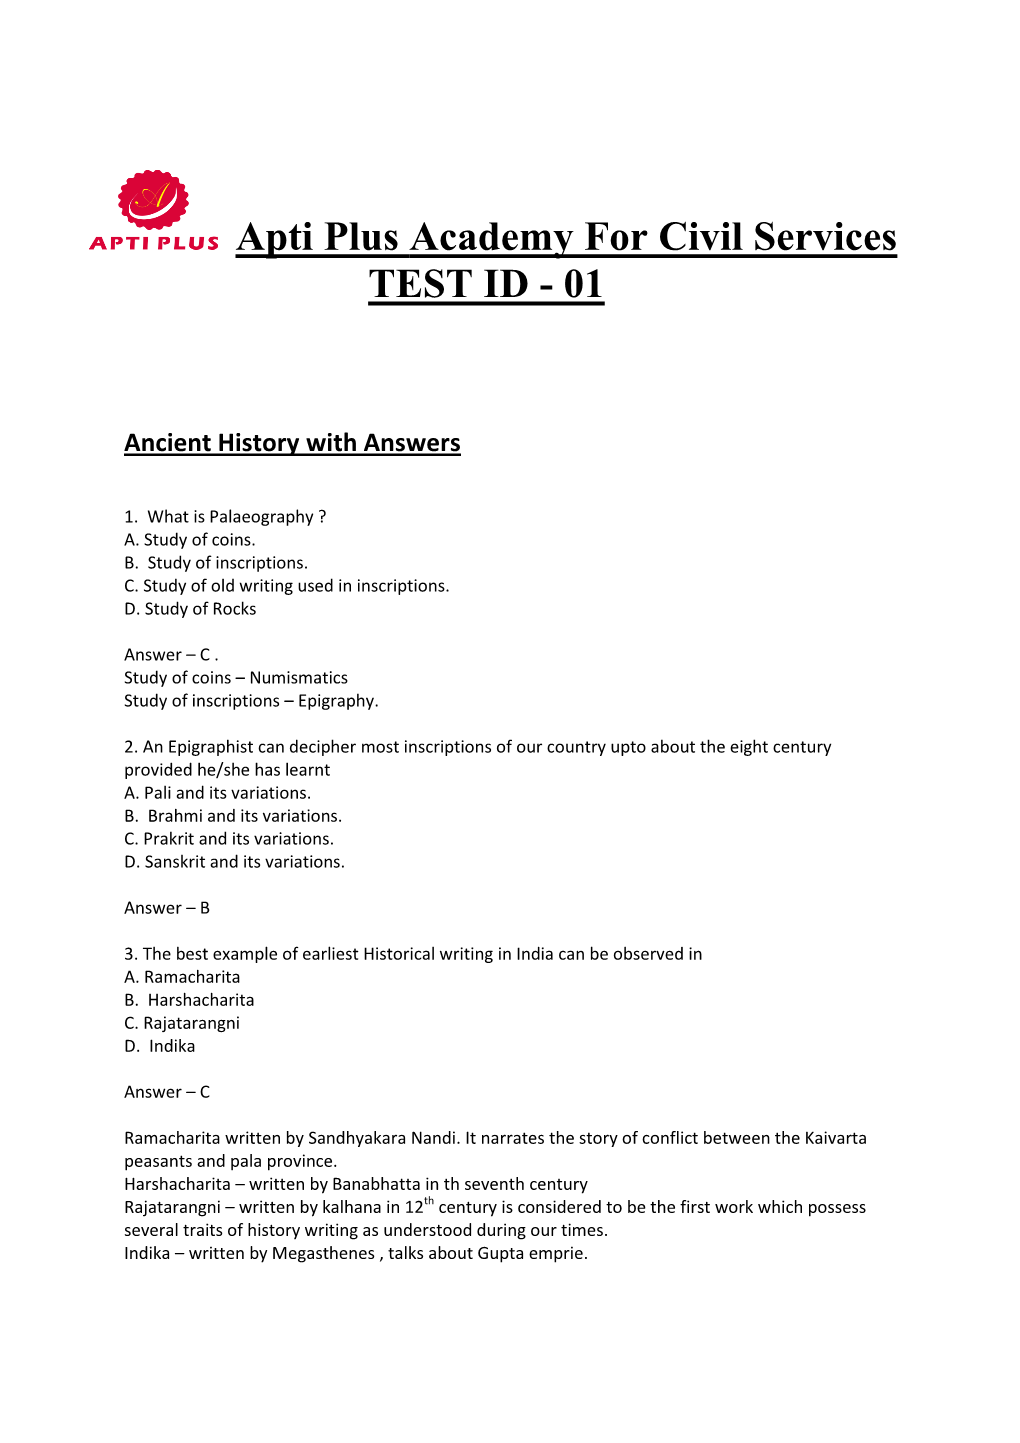 Apti Plus Academy for Civil Services TEST ID - 01